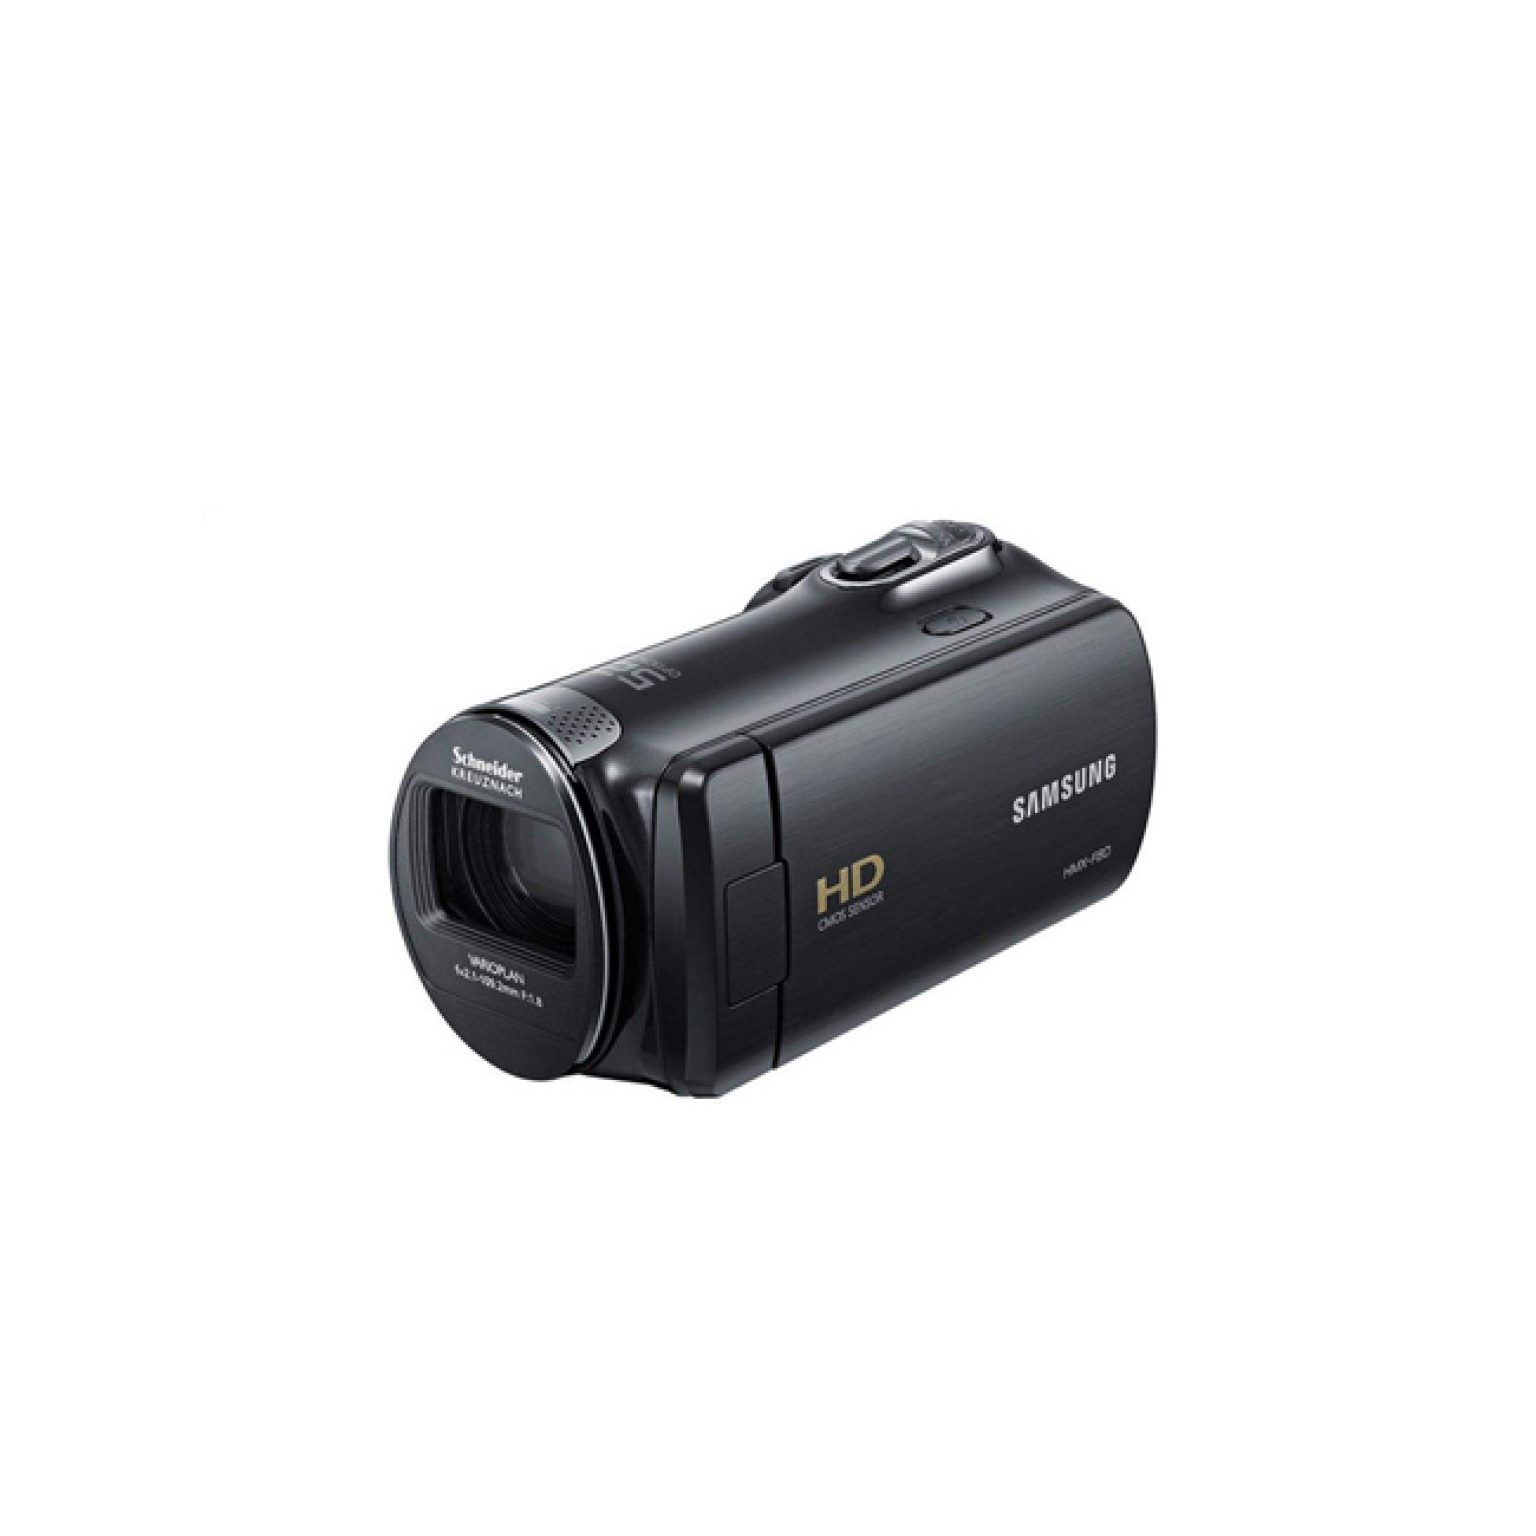 HMX F80 Video Camera 1